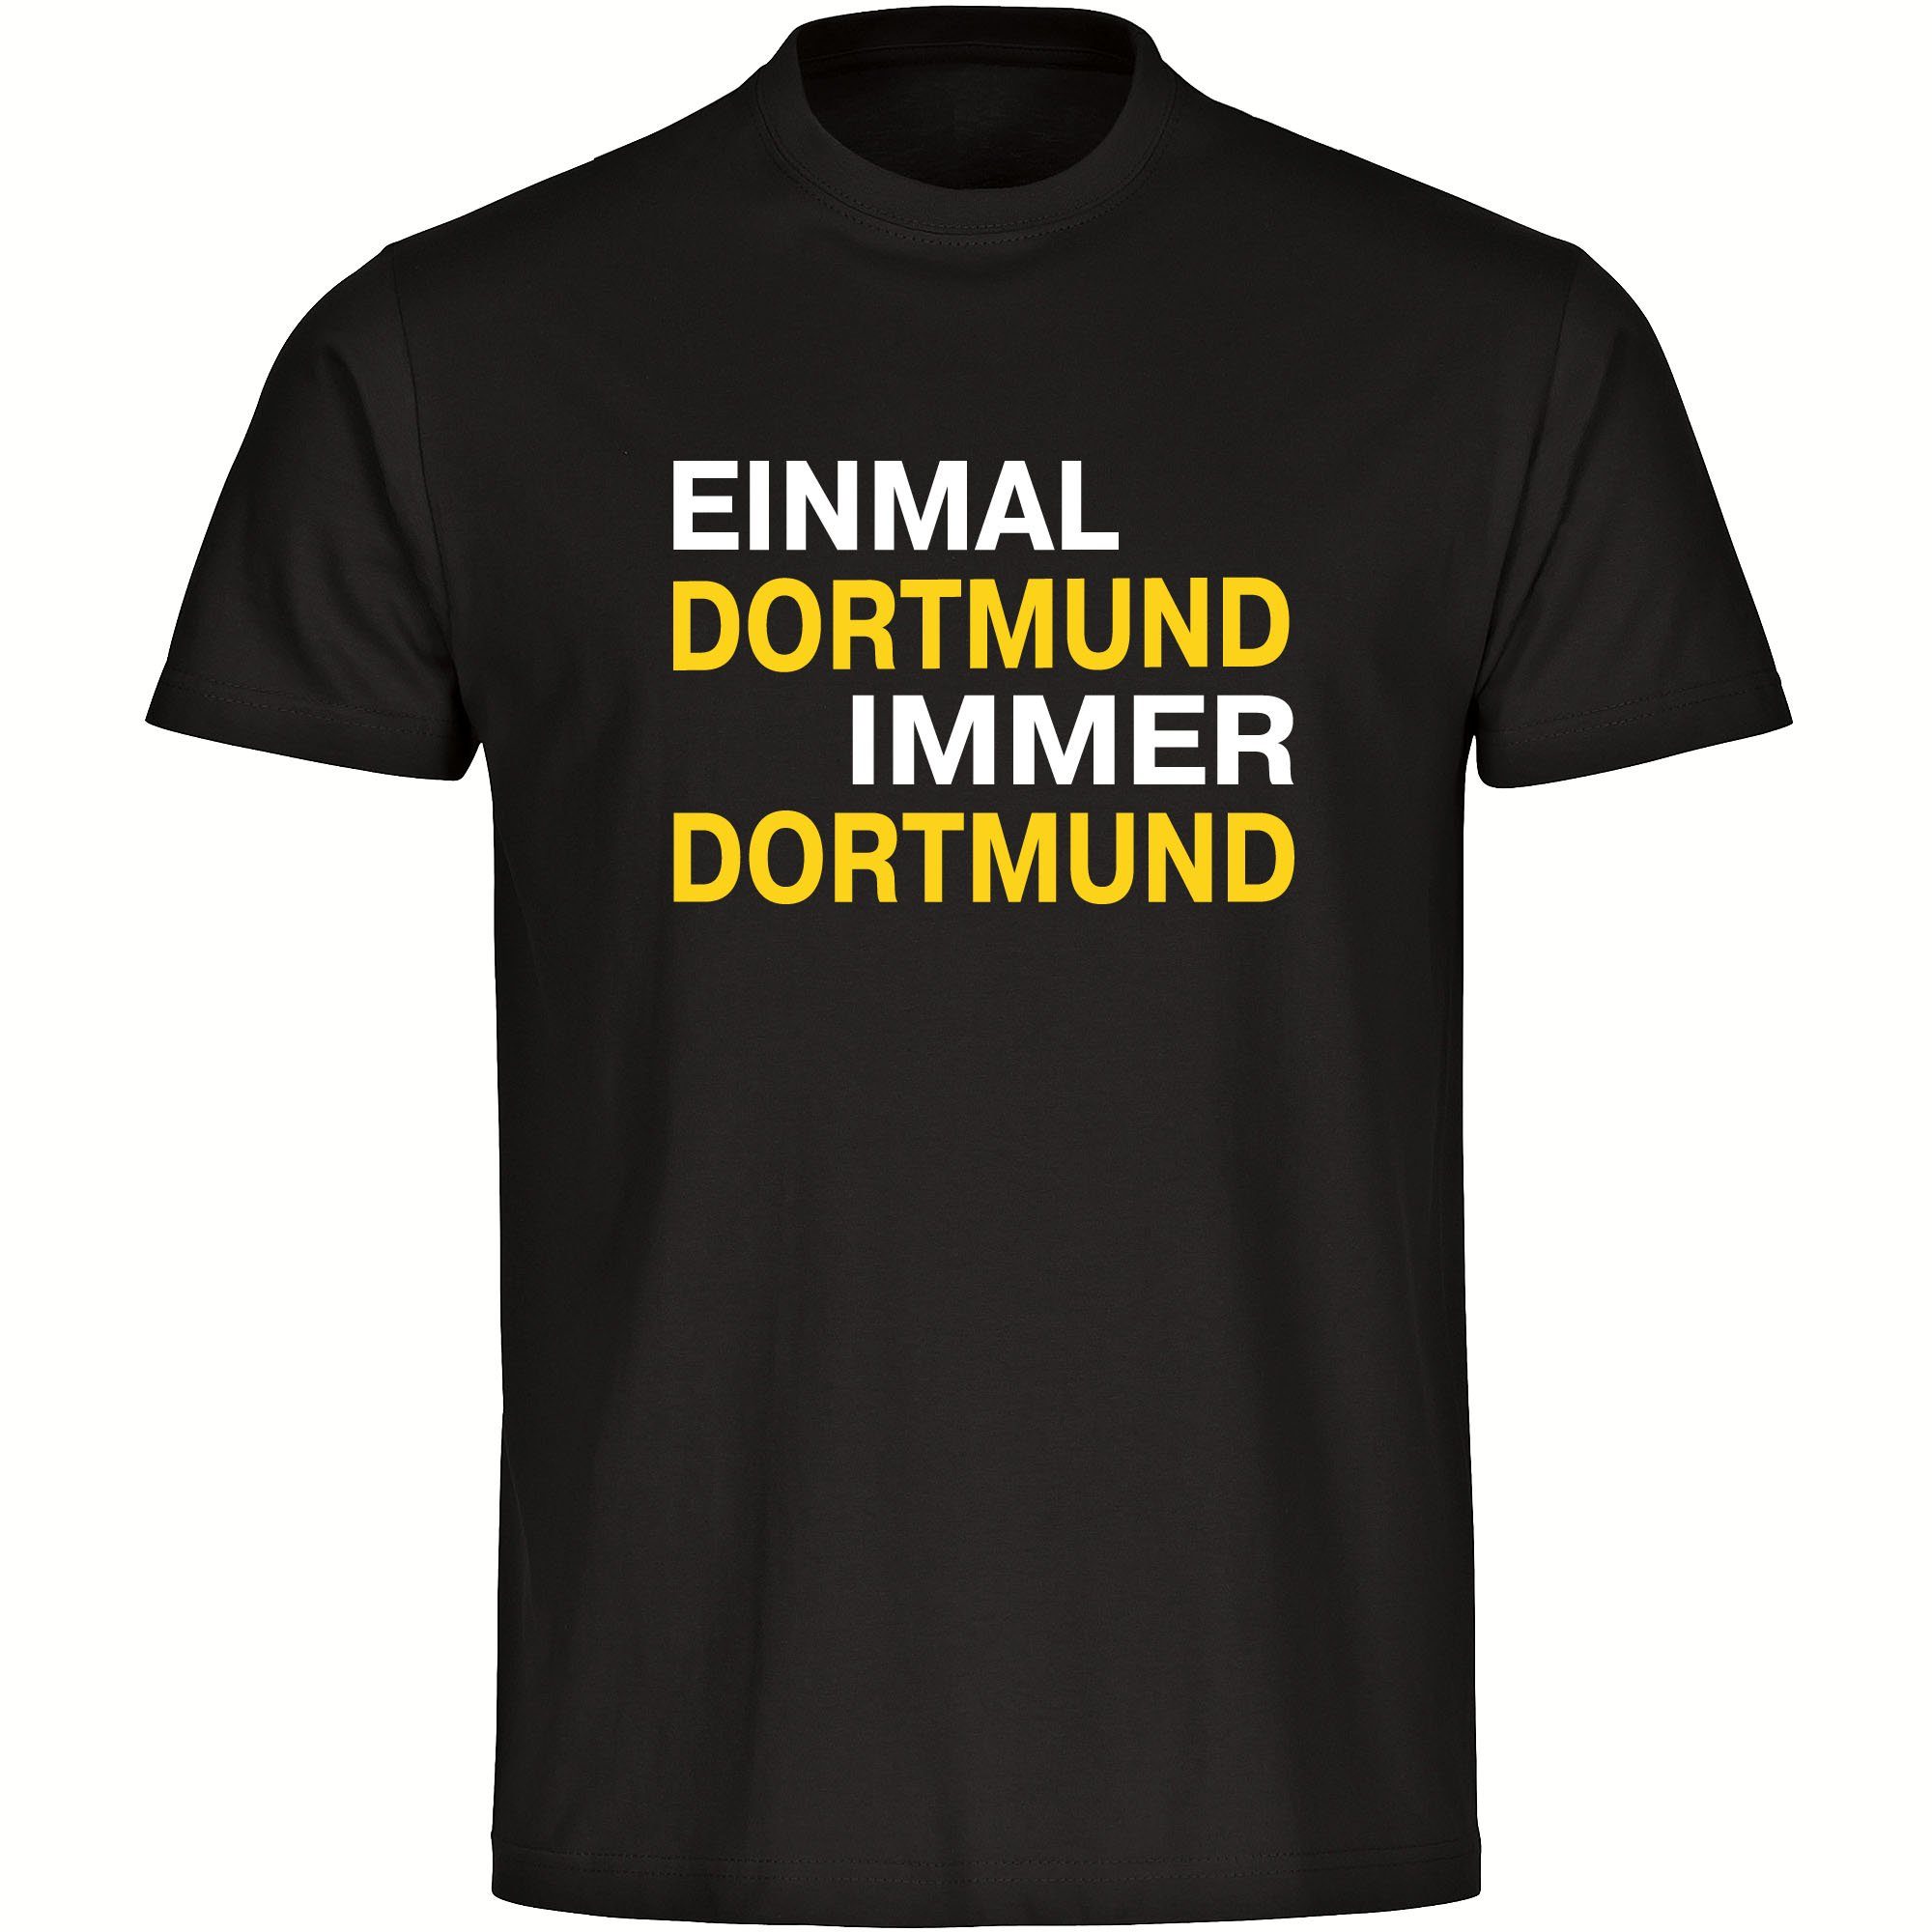 multifanshop T-Shirt Kinder Dortmund - Einmal Immer - Boy Girl